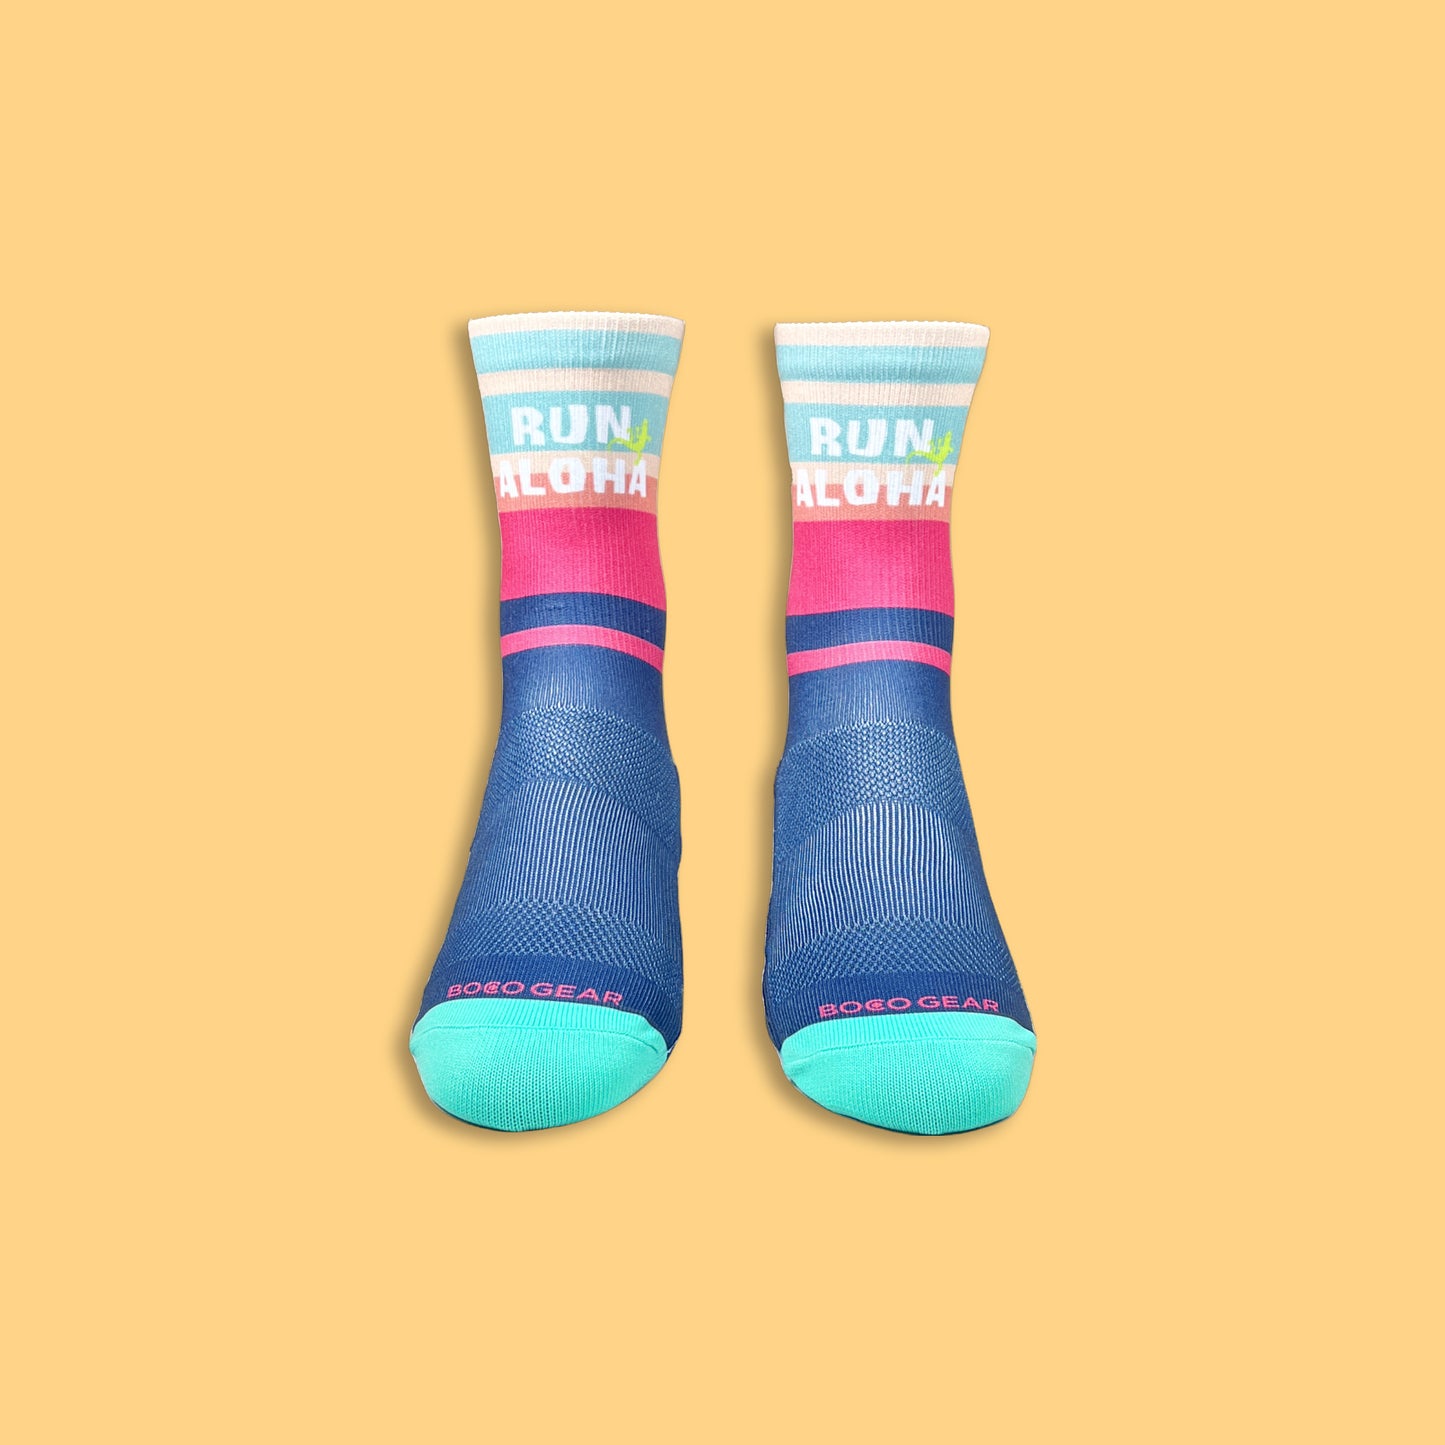 Colorful Crew Socks